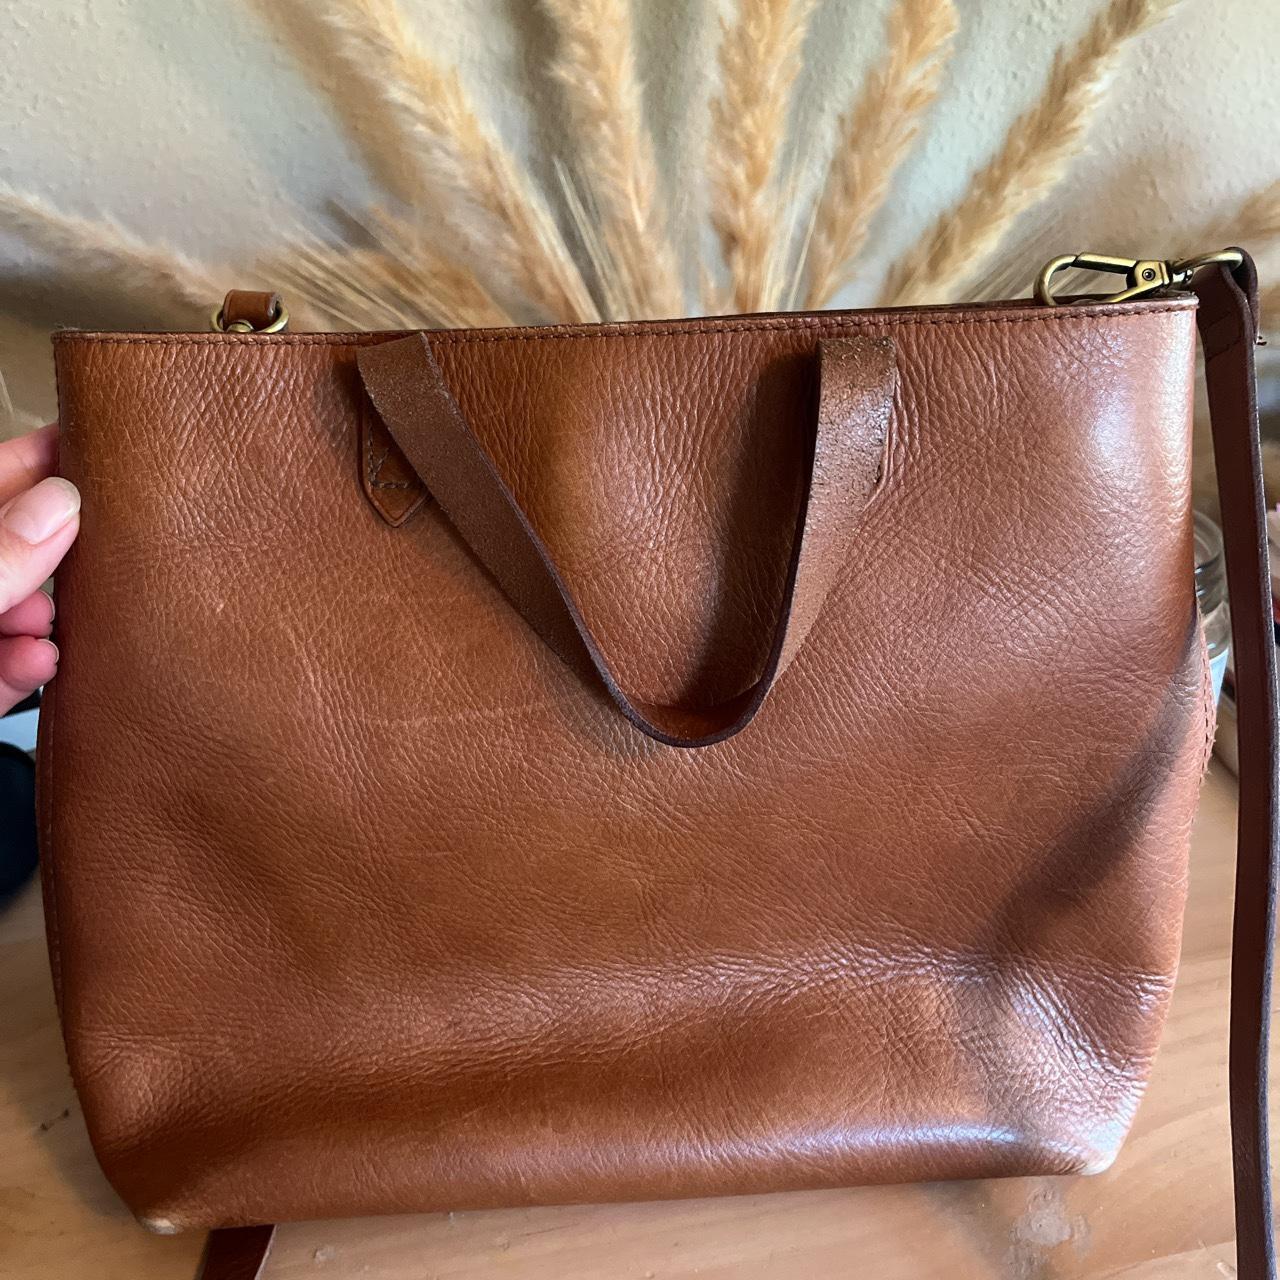 Madewell Women's Brown Bag